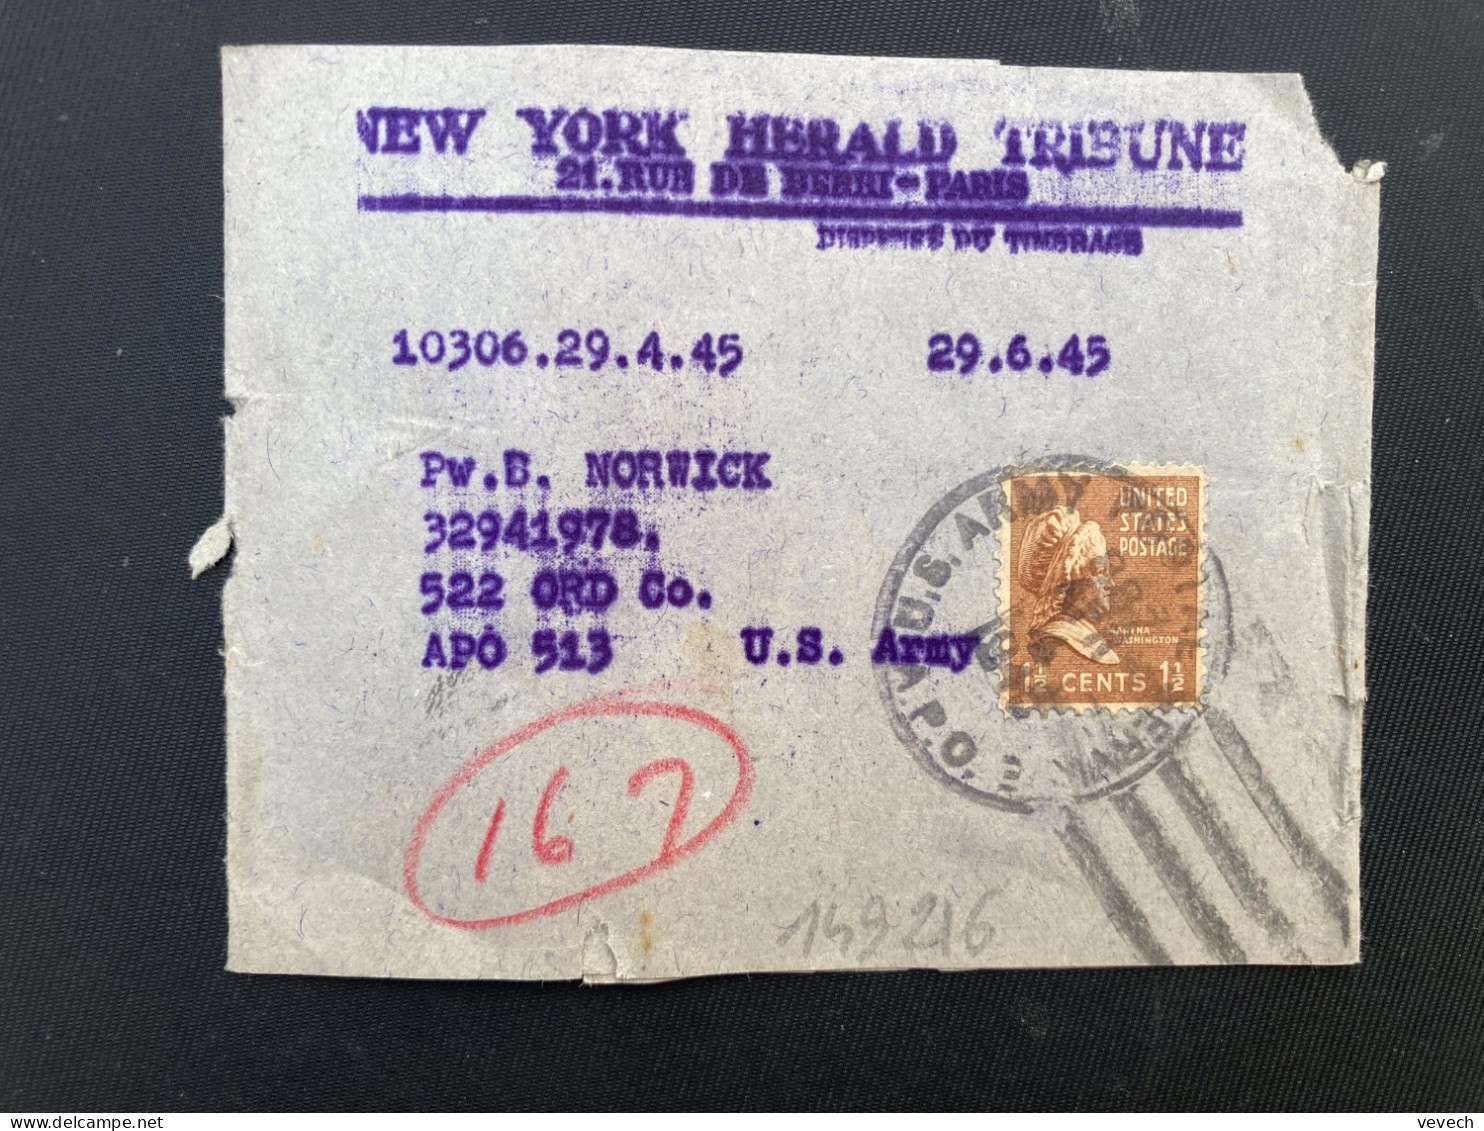 BJ NEW YORK HERALD TRIBUNE Pour APO 513 TP WASHINGTON 1 1/2c OBL.MEC.APR 4 1945 APO 3 - Marcophilie